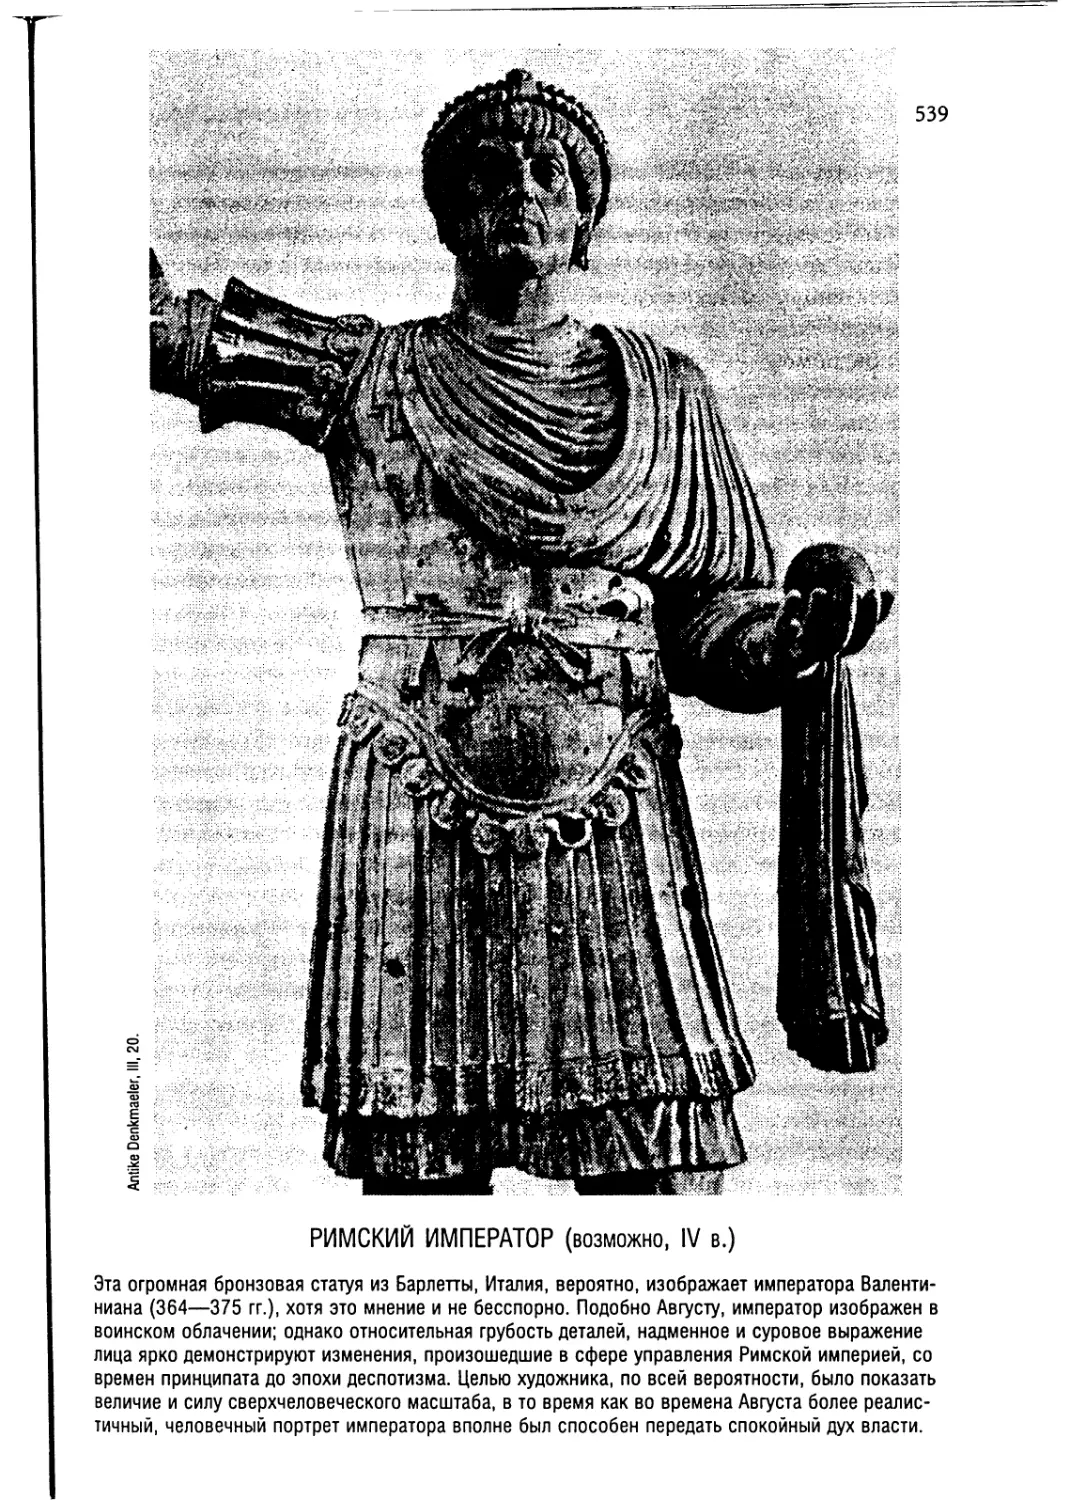 Римский император [539]